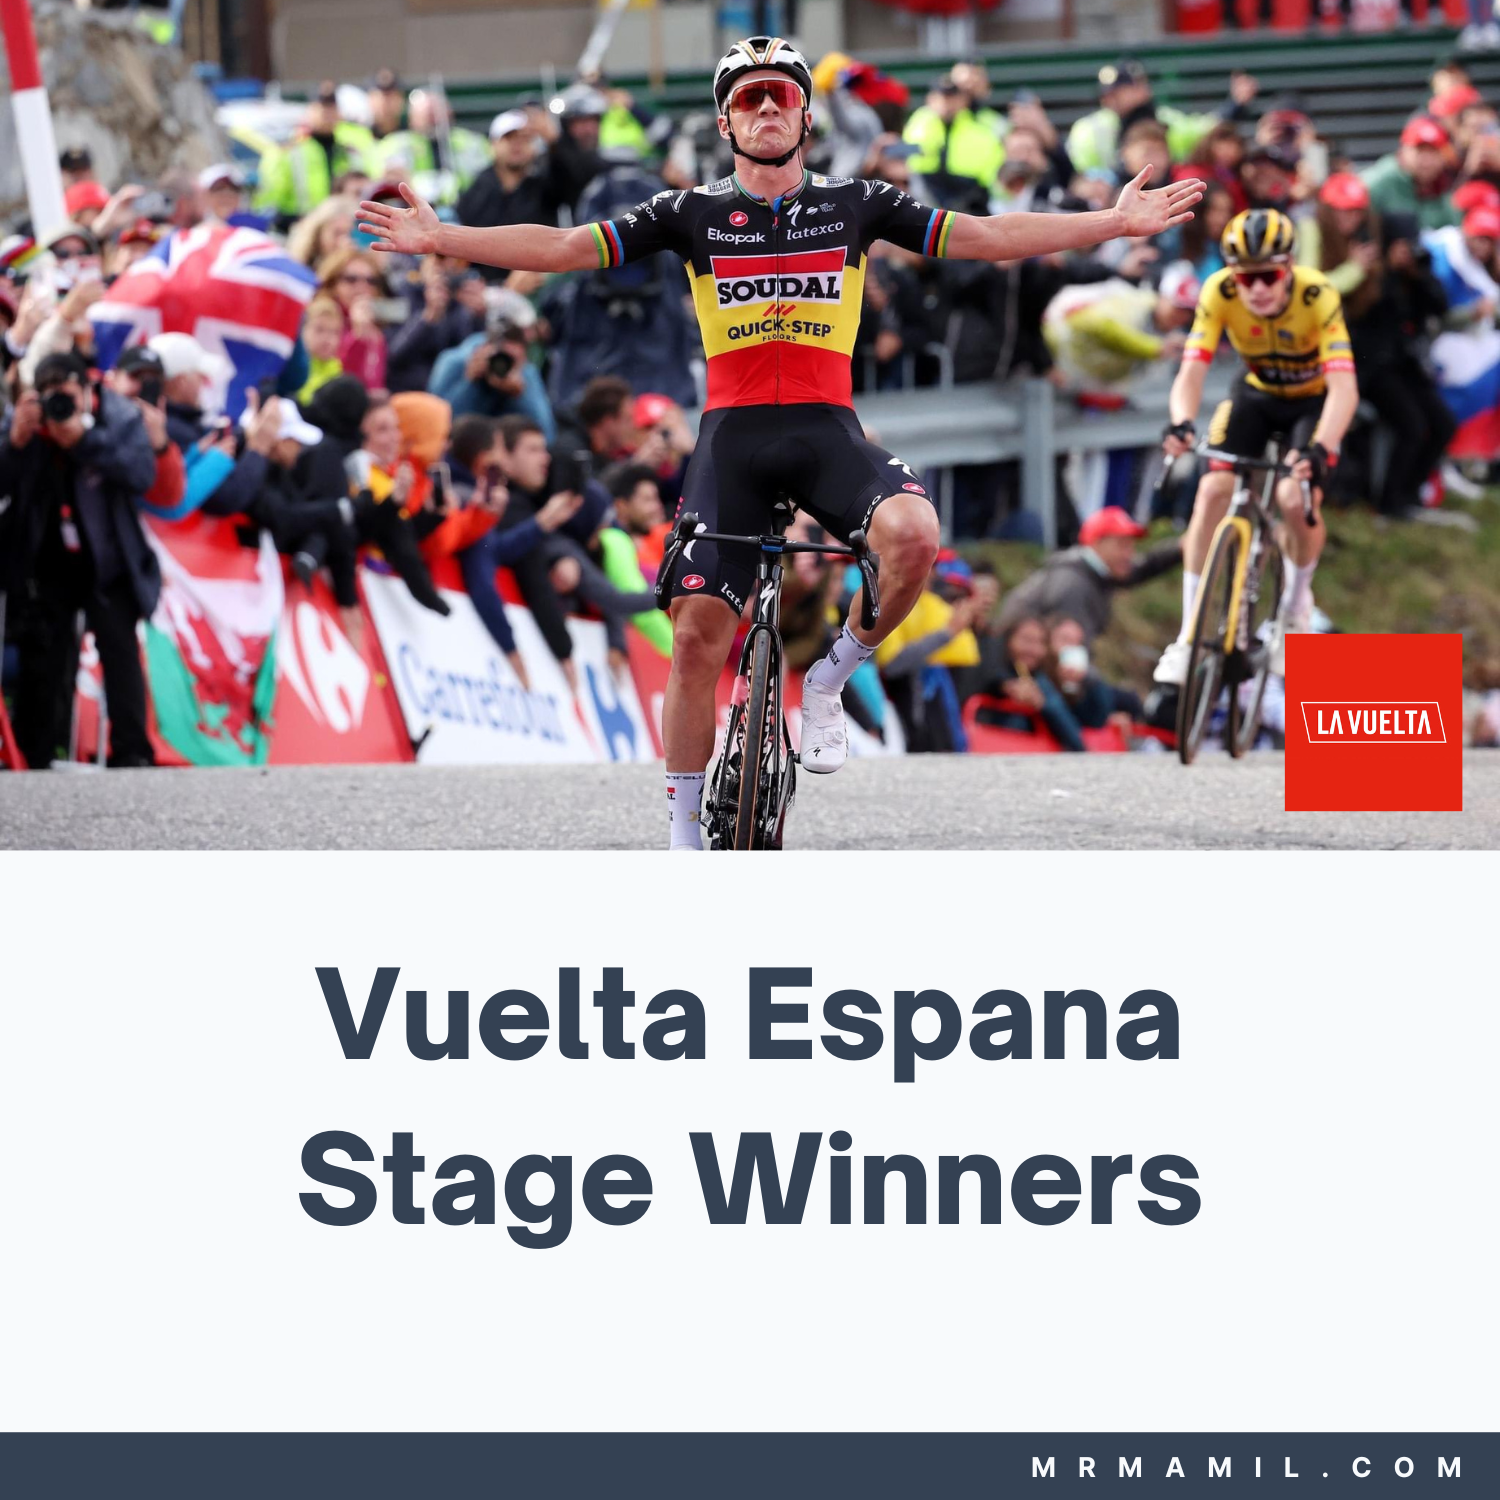 Vuelta Espana Stage Winners